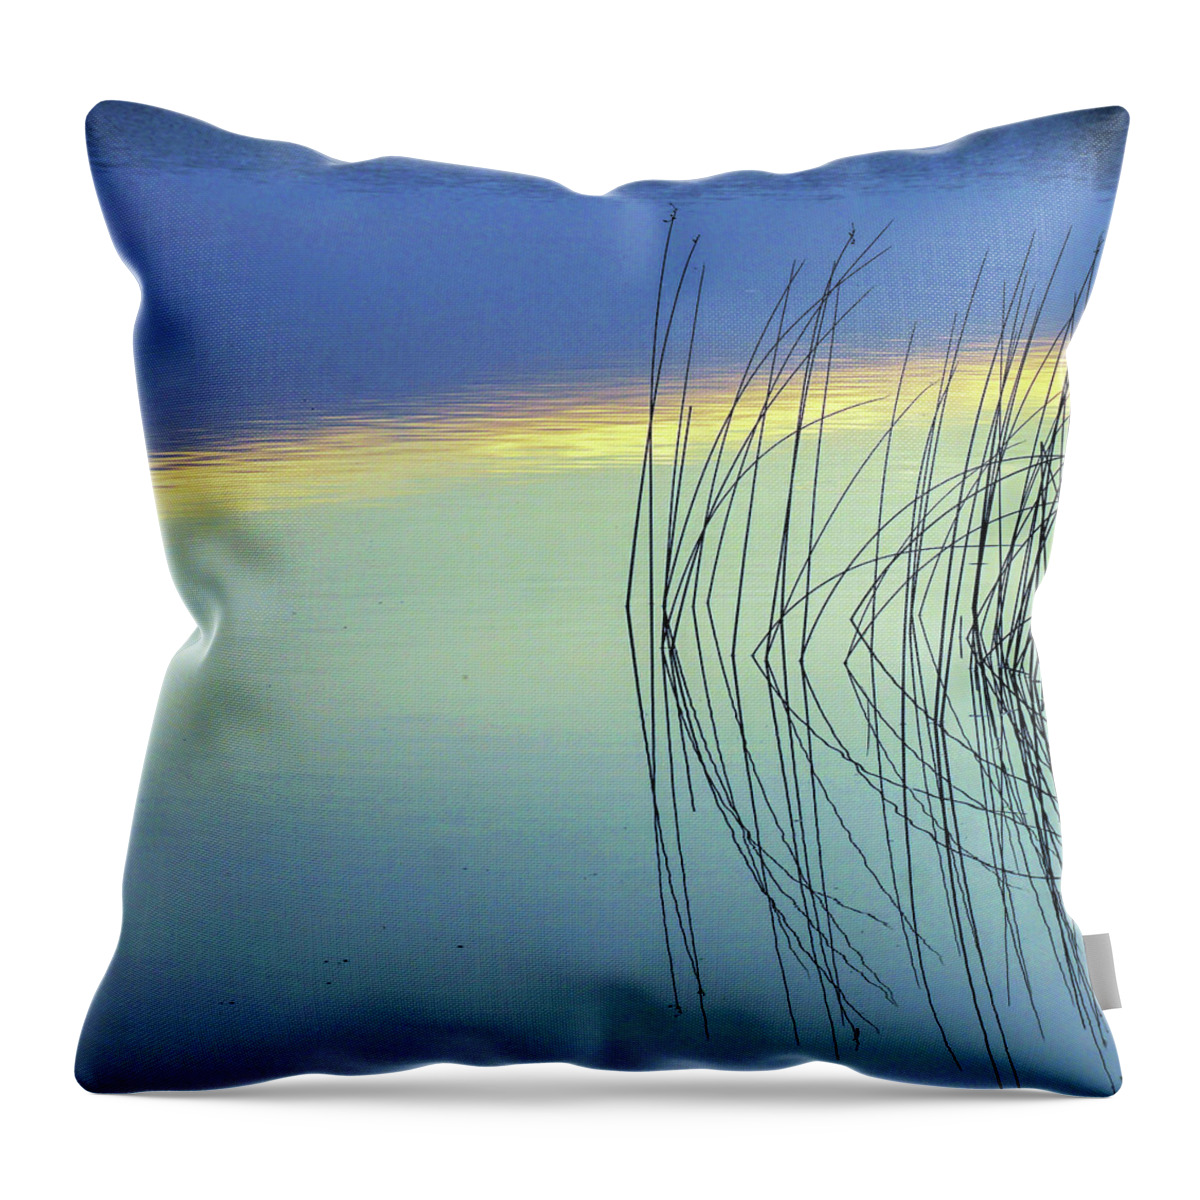 Reeds Throw Pillow featuring the photograph Reeds by David Ralph Johnson